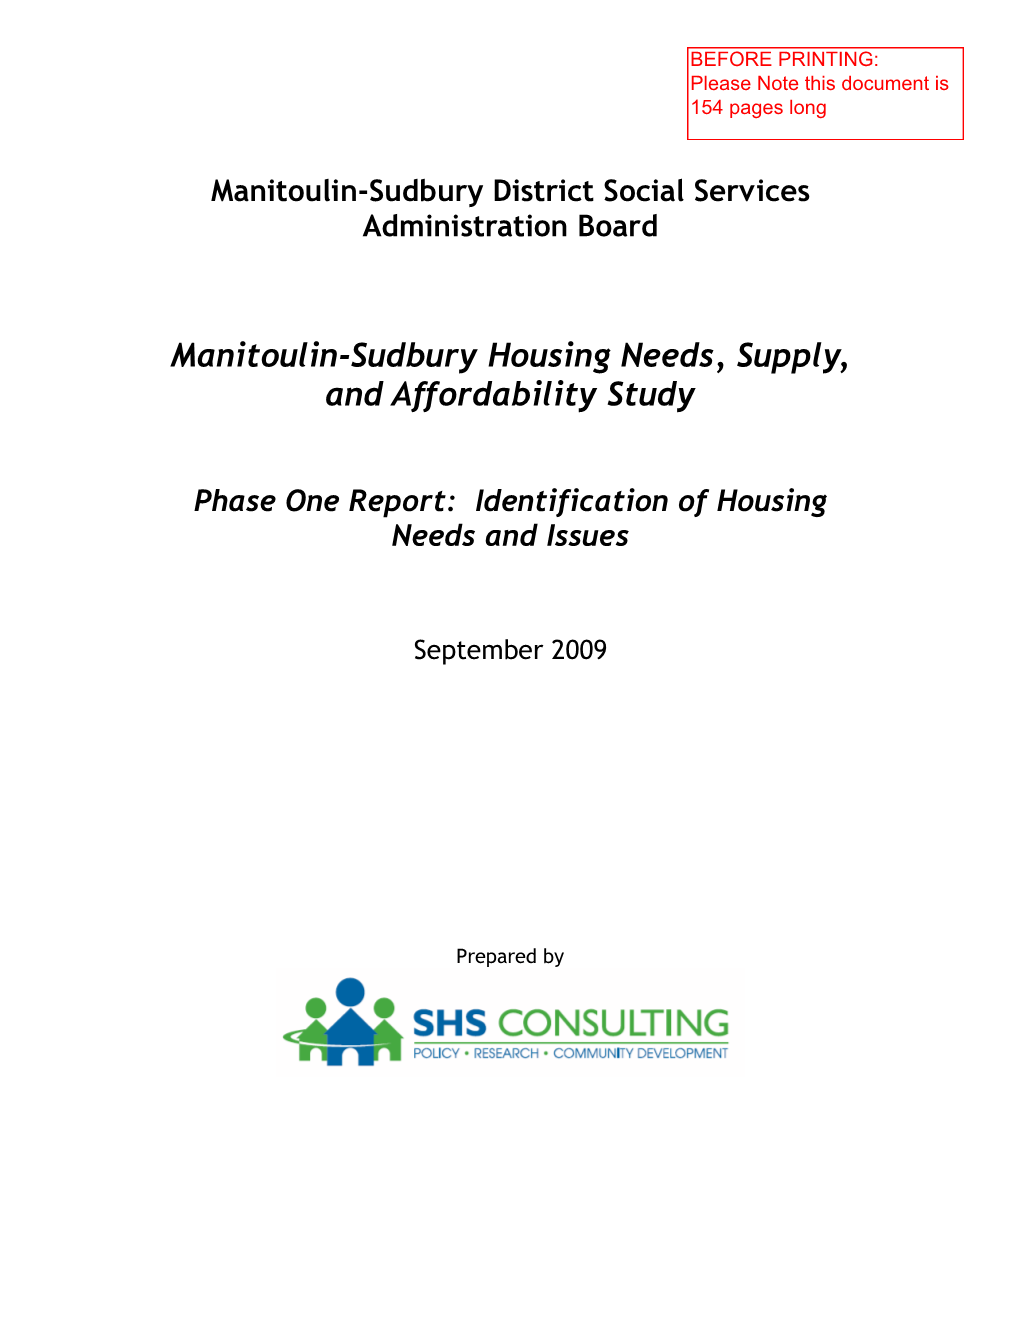 Manitoulin-Sudbury Housing Needs, Supply, and Affordability Study